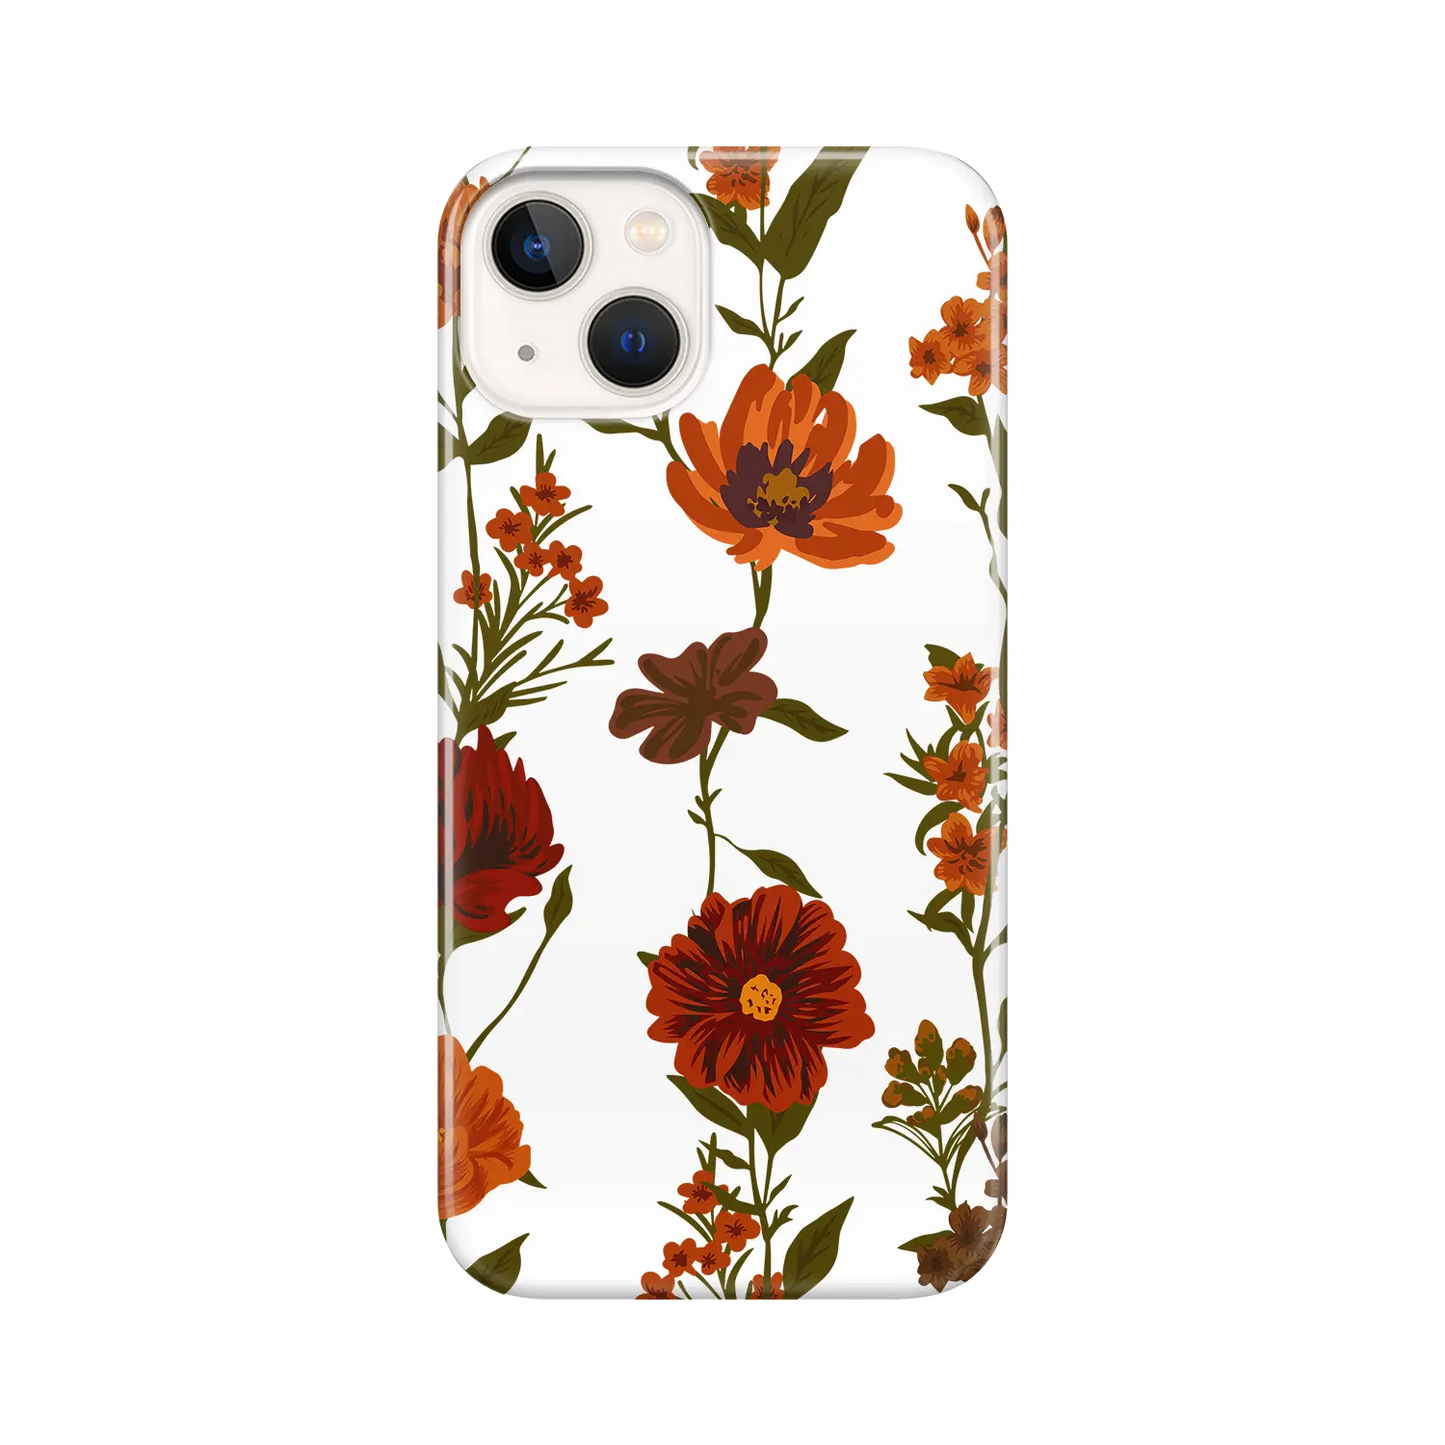 Vertical Garden - Personalised iPhone Case